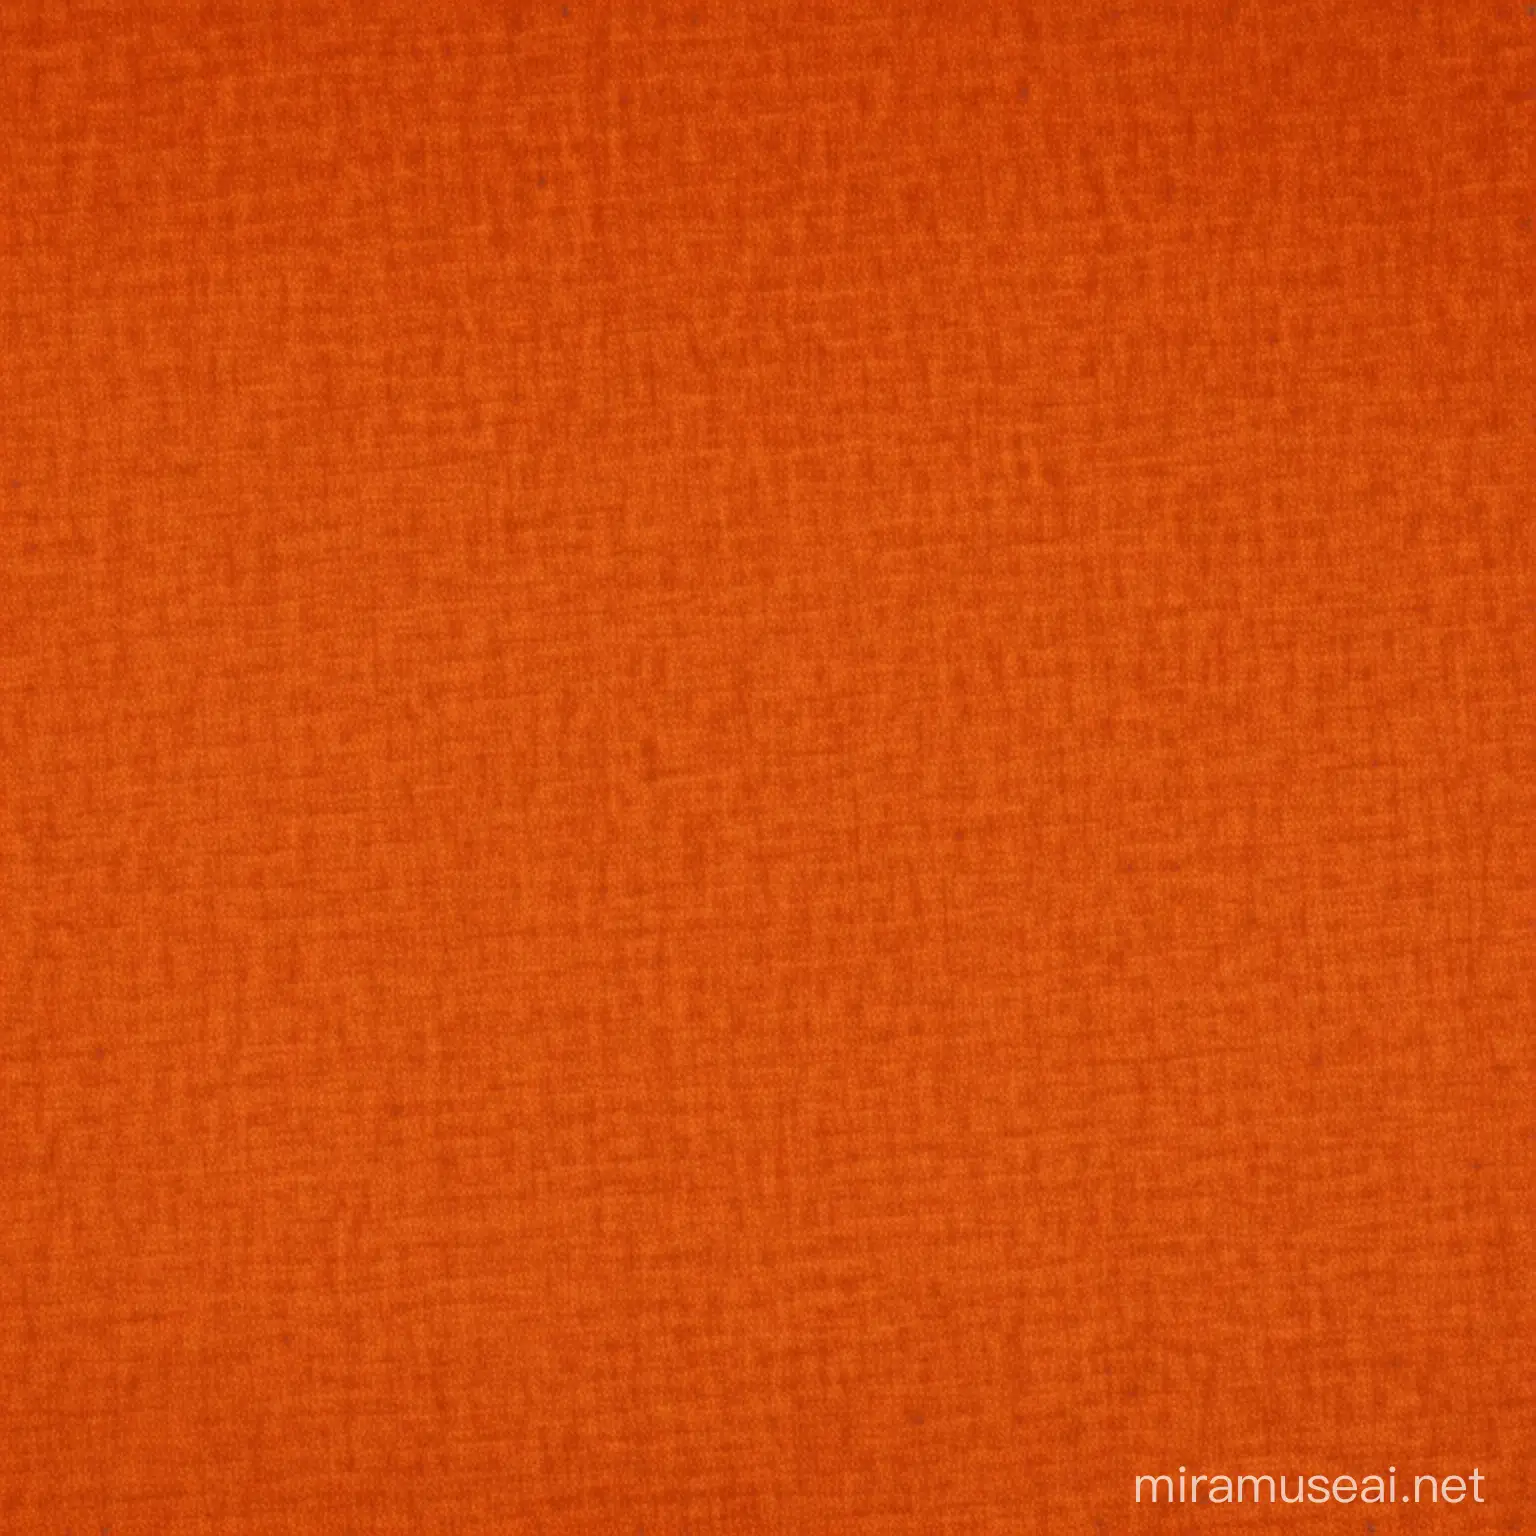 Vibrant Orange Velvet Background with Soft Textures